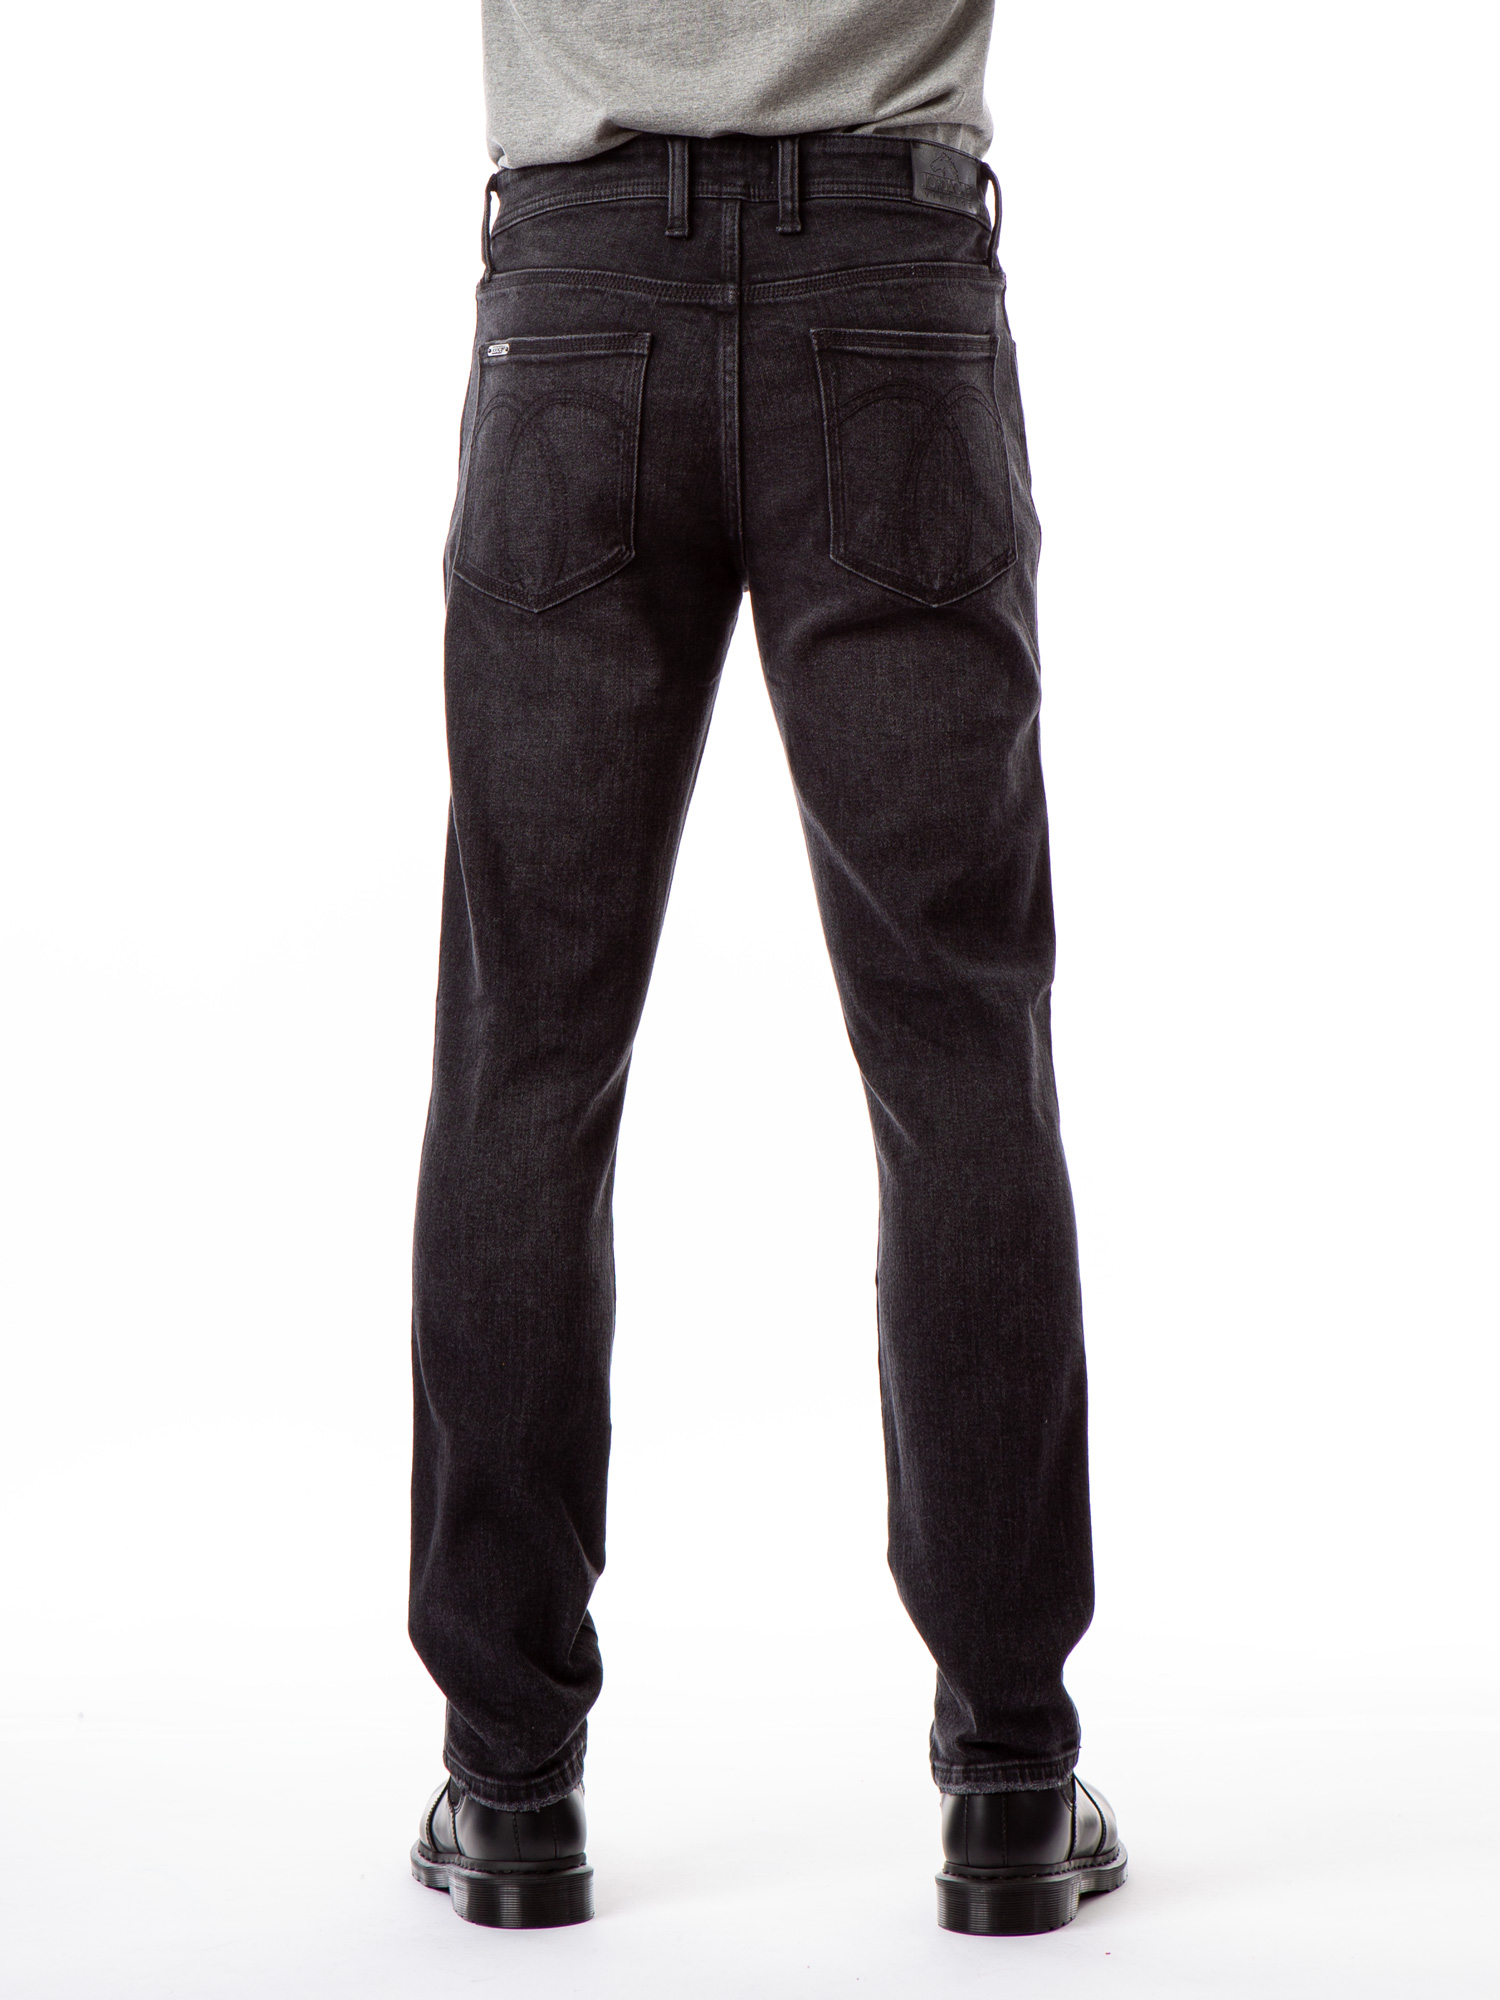 Jordache Vintage Men's Brad Athletic Slim Jeans - image 2 of 6